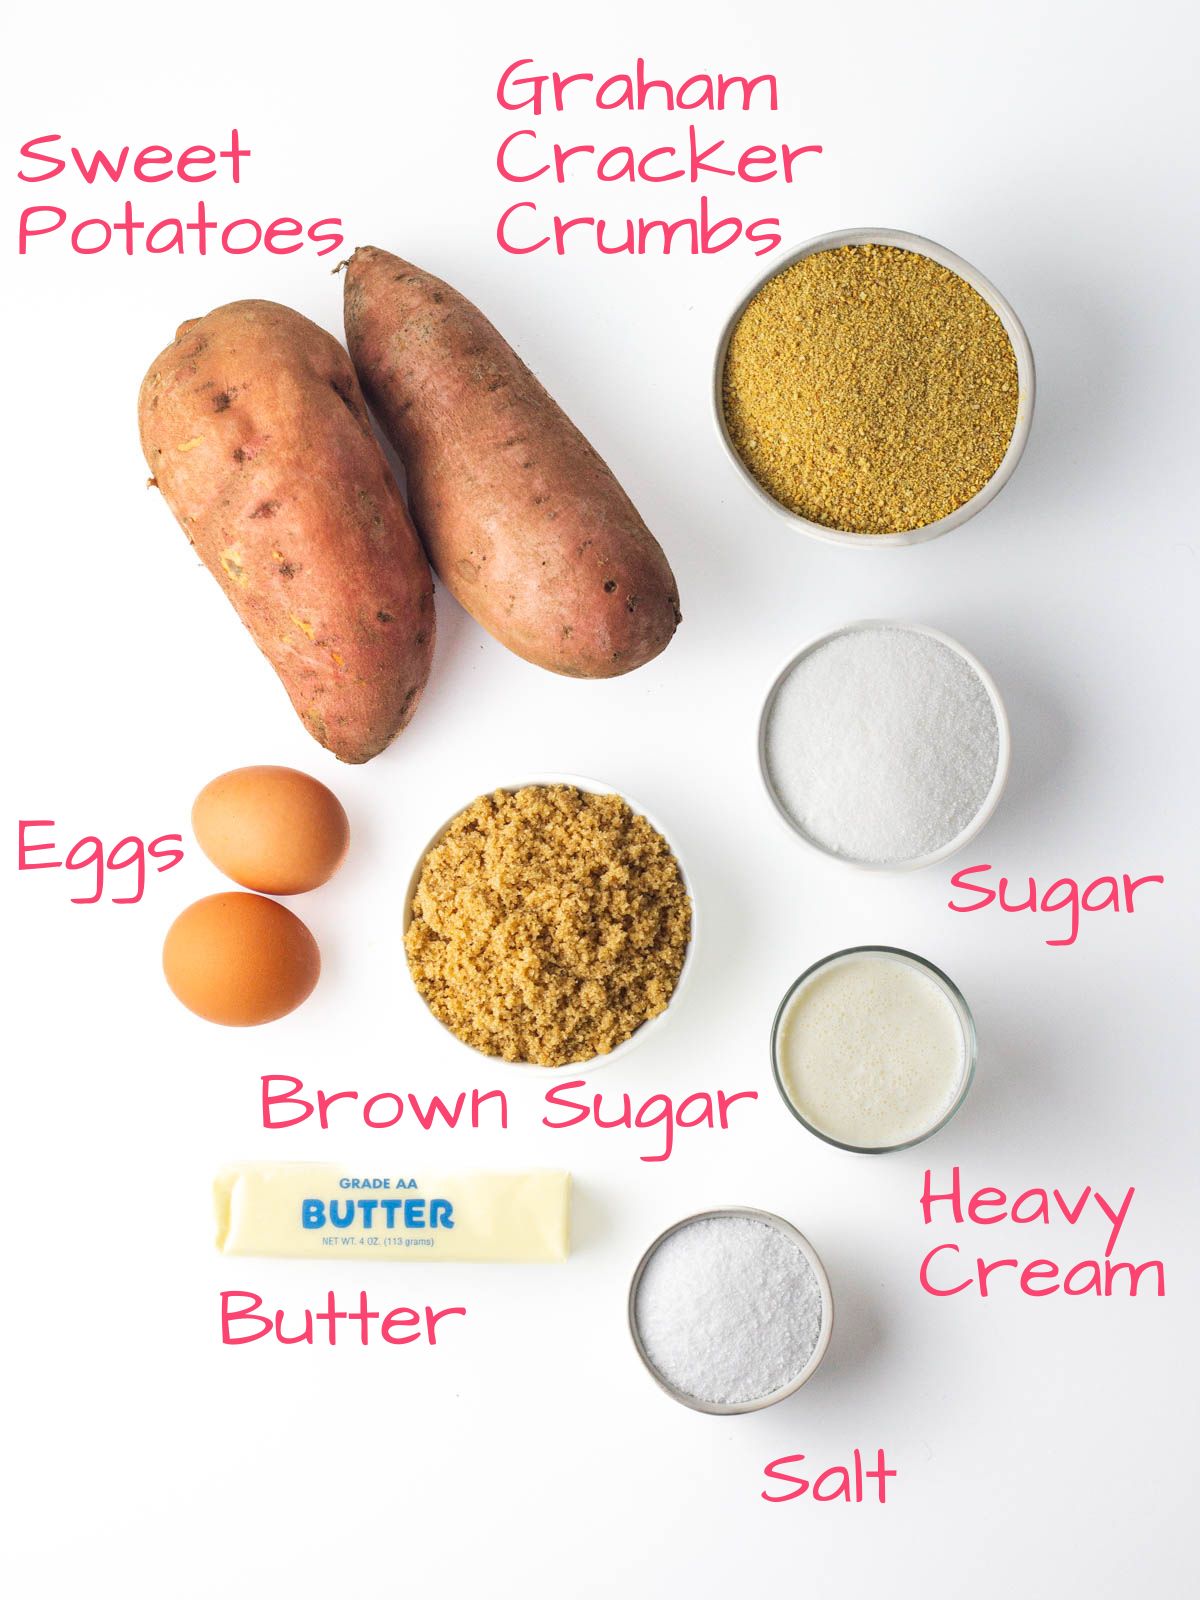 Ingredients needed to make sweet potato pie with graham cracker crust.